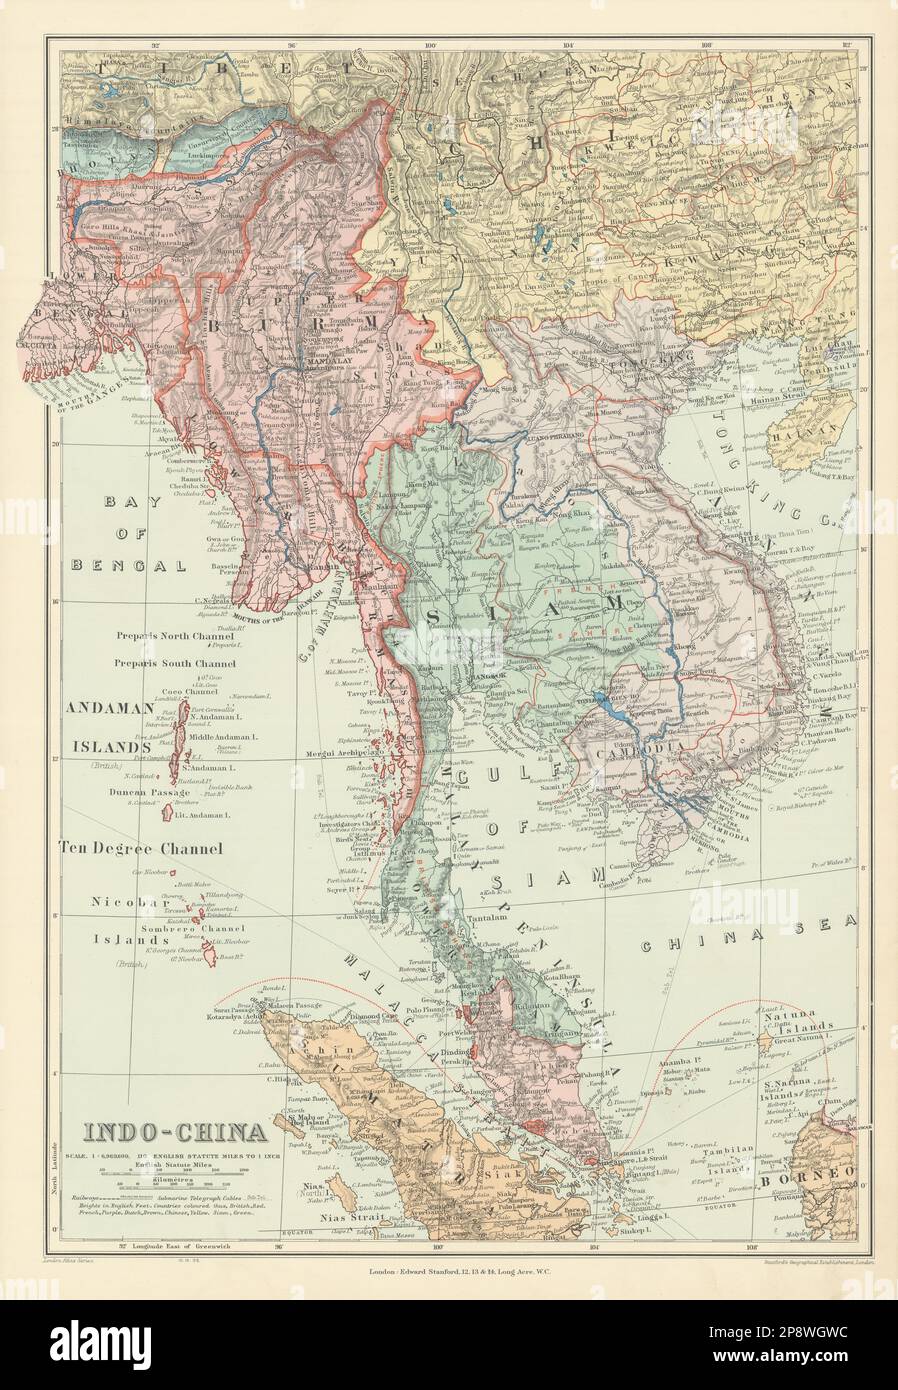 Indo-China. Indochina. Siam Annam Burma Thailand Cambodia. STANFORD 1904 map Stock Photo